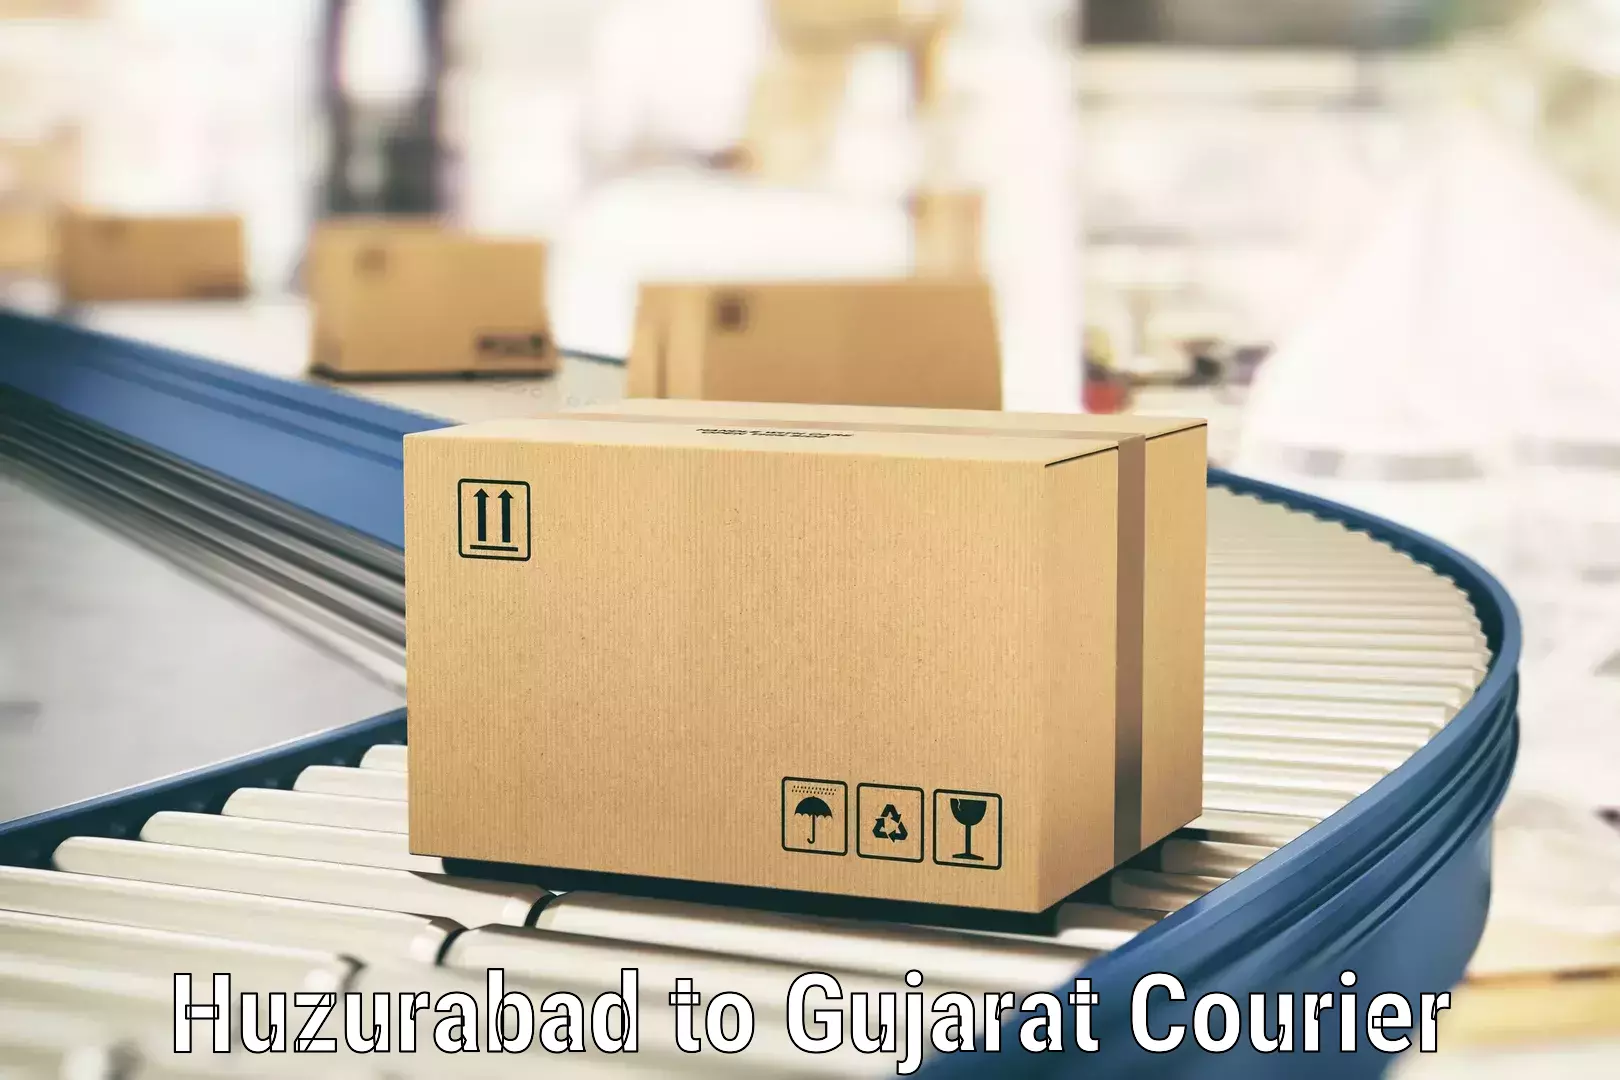 Professional courier handling Huzurabad to Rajula